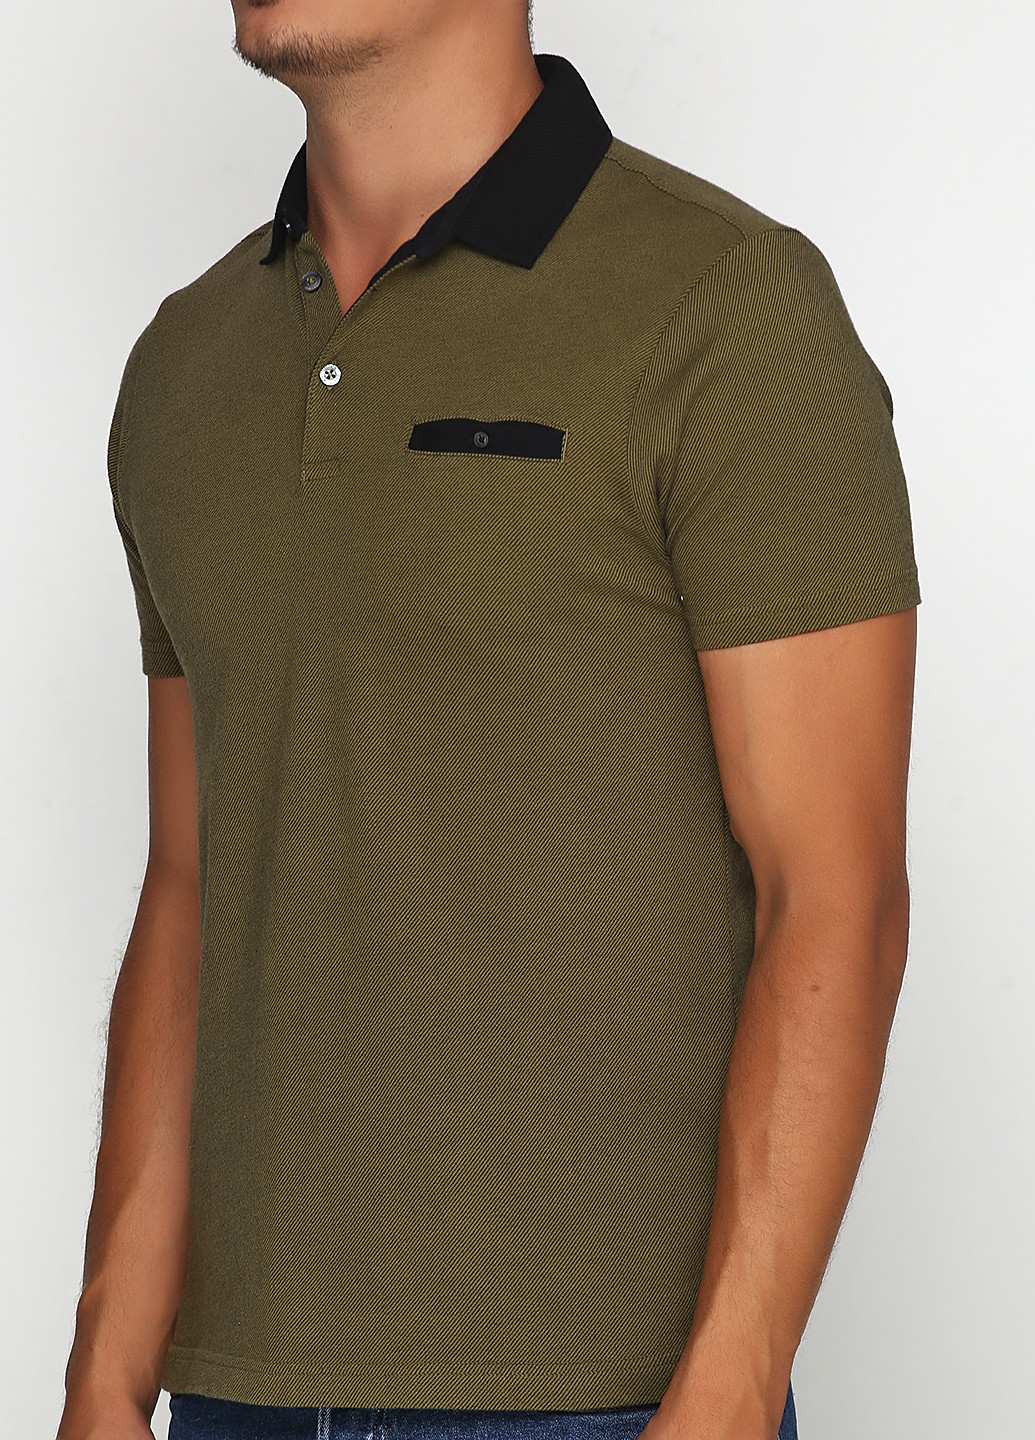 Оливковая (хаки) футболка-поло для мужчин Marks & Spencer